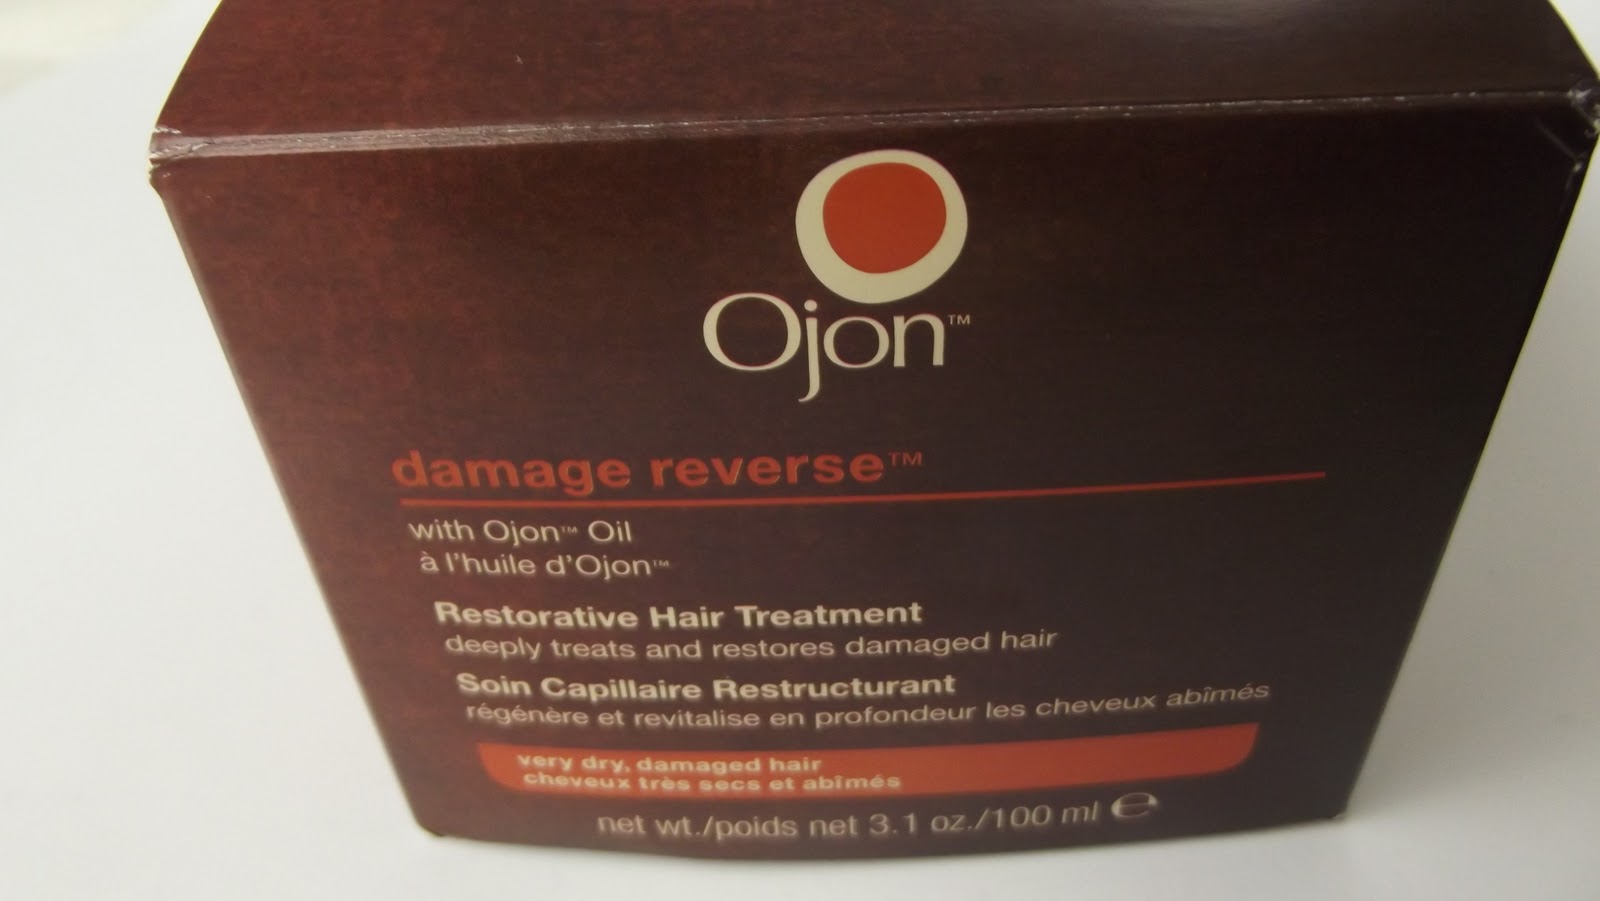 Ojon Damage Reserve Restorative Hair Treatment Review Perfectly